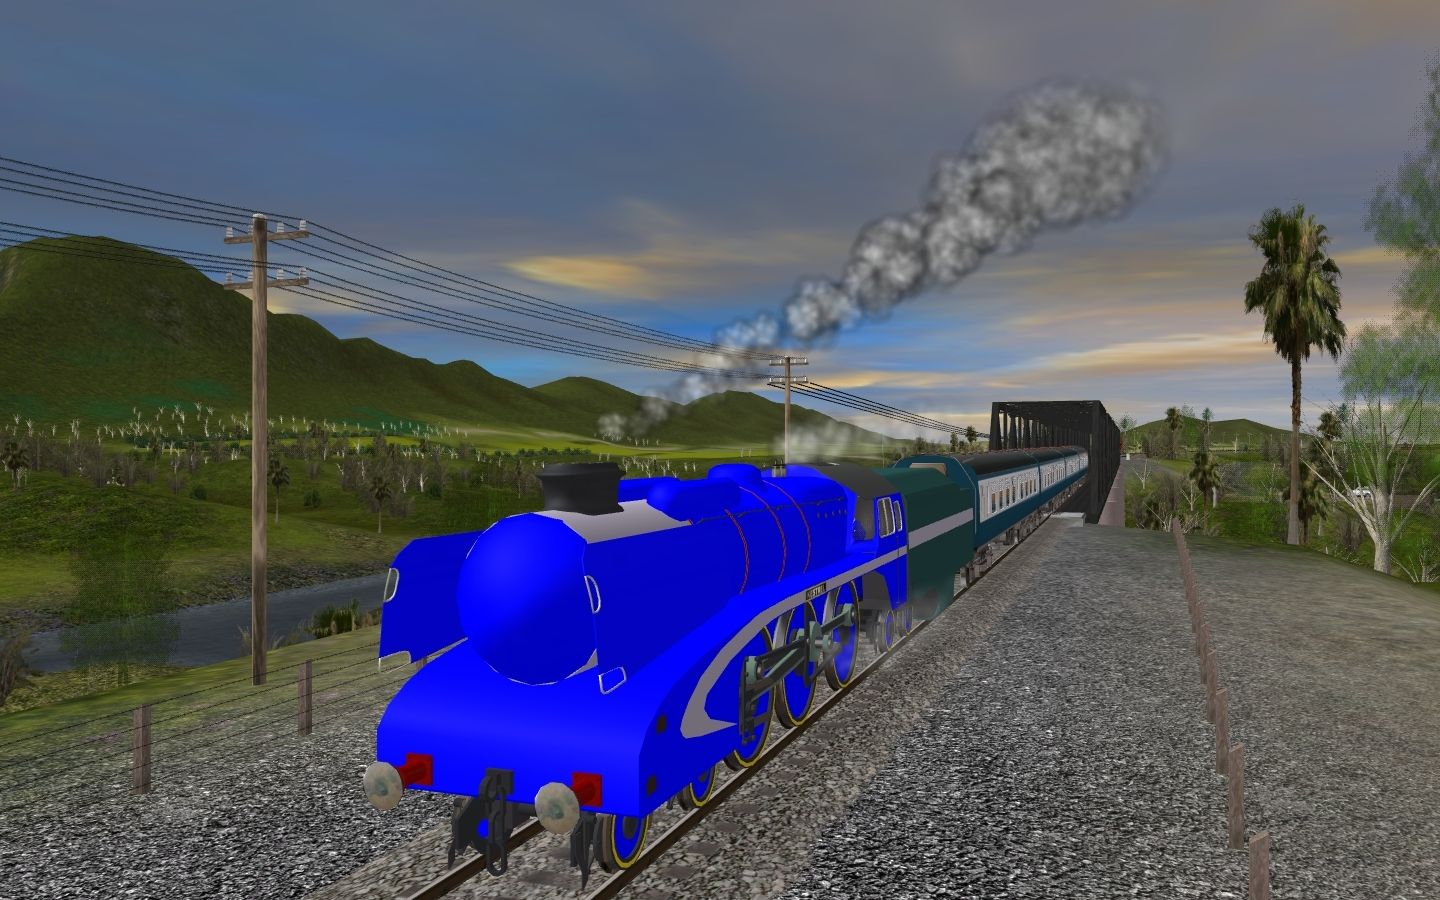 5AT-Steam-locomotive-on-tour-in-Kauai.jpg